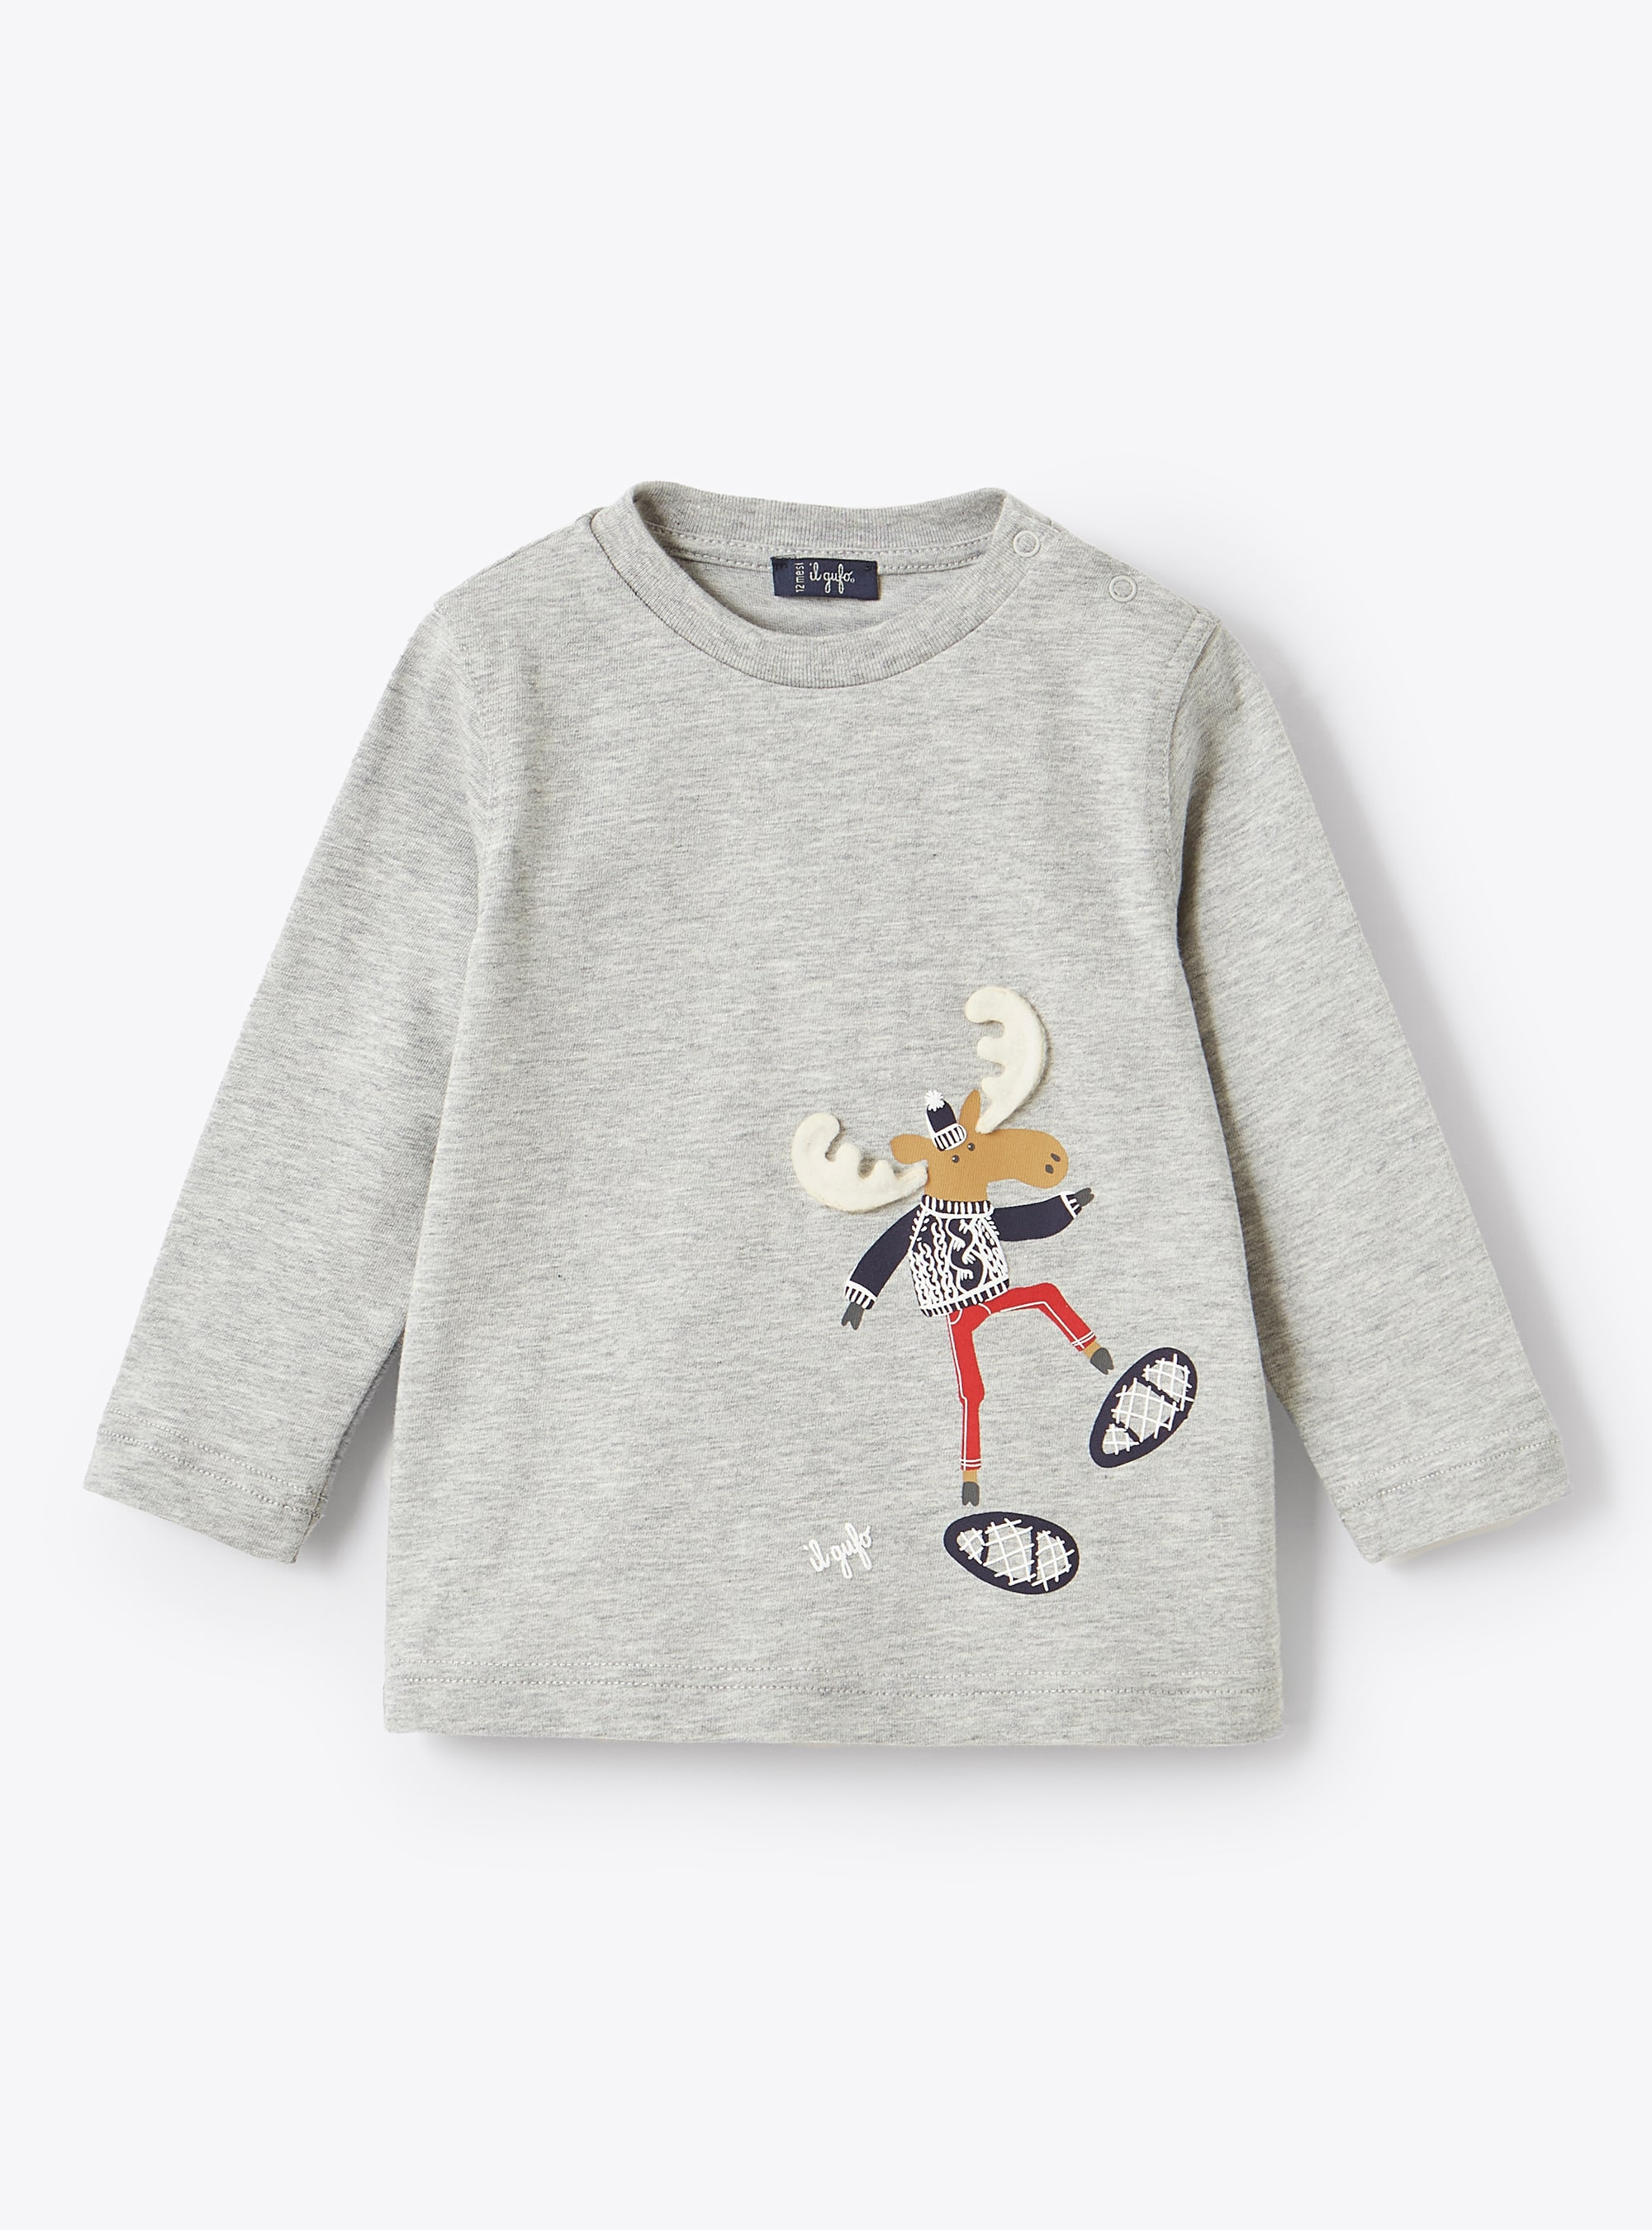 Reindeer grey jersey top - T-shirts - Il Gufo